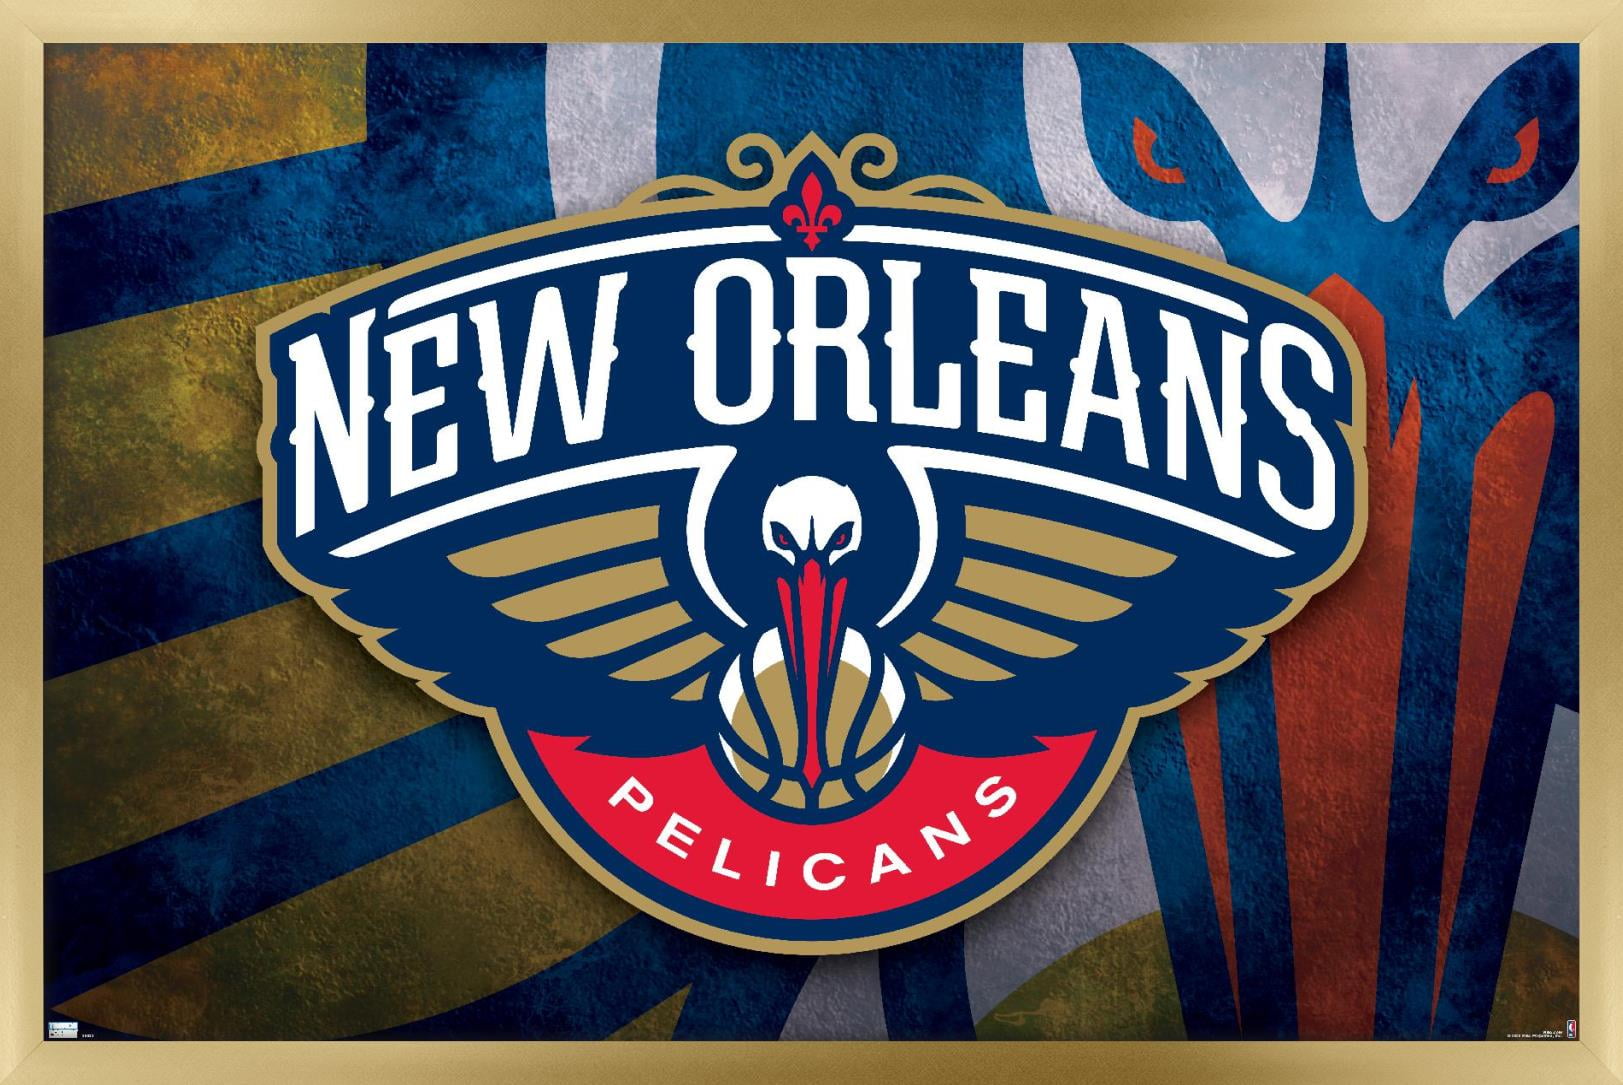 NBA New Orleans Pelicans - Logo 20 Wall Poster, 22.375 inch x 34 inch, POD20092EC